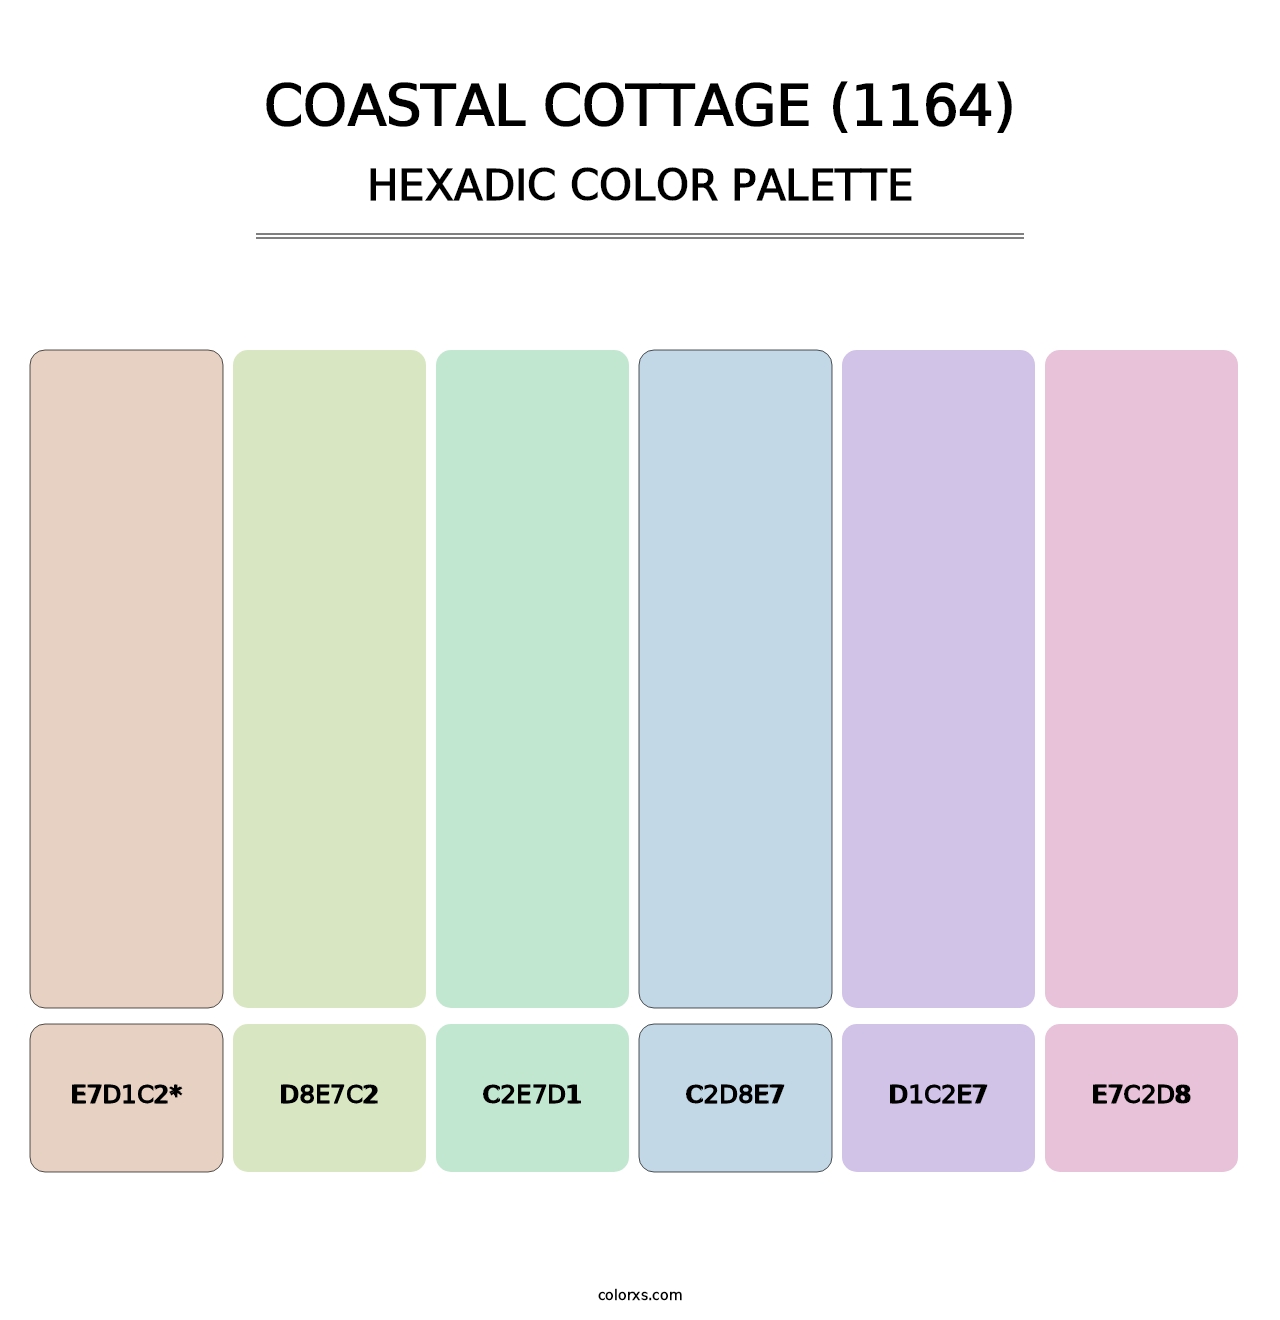 Coastal Cottage (1164) - Hexadic Color Palette